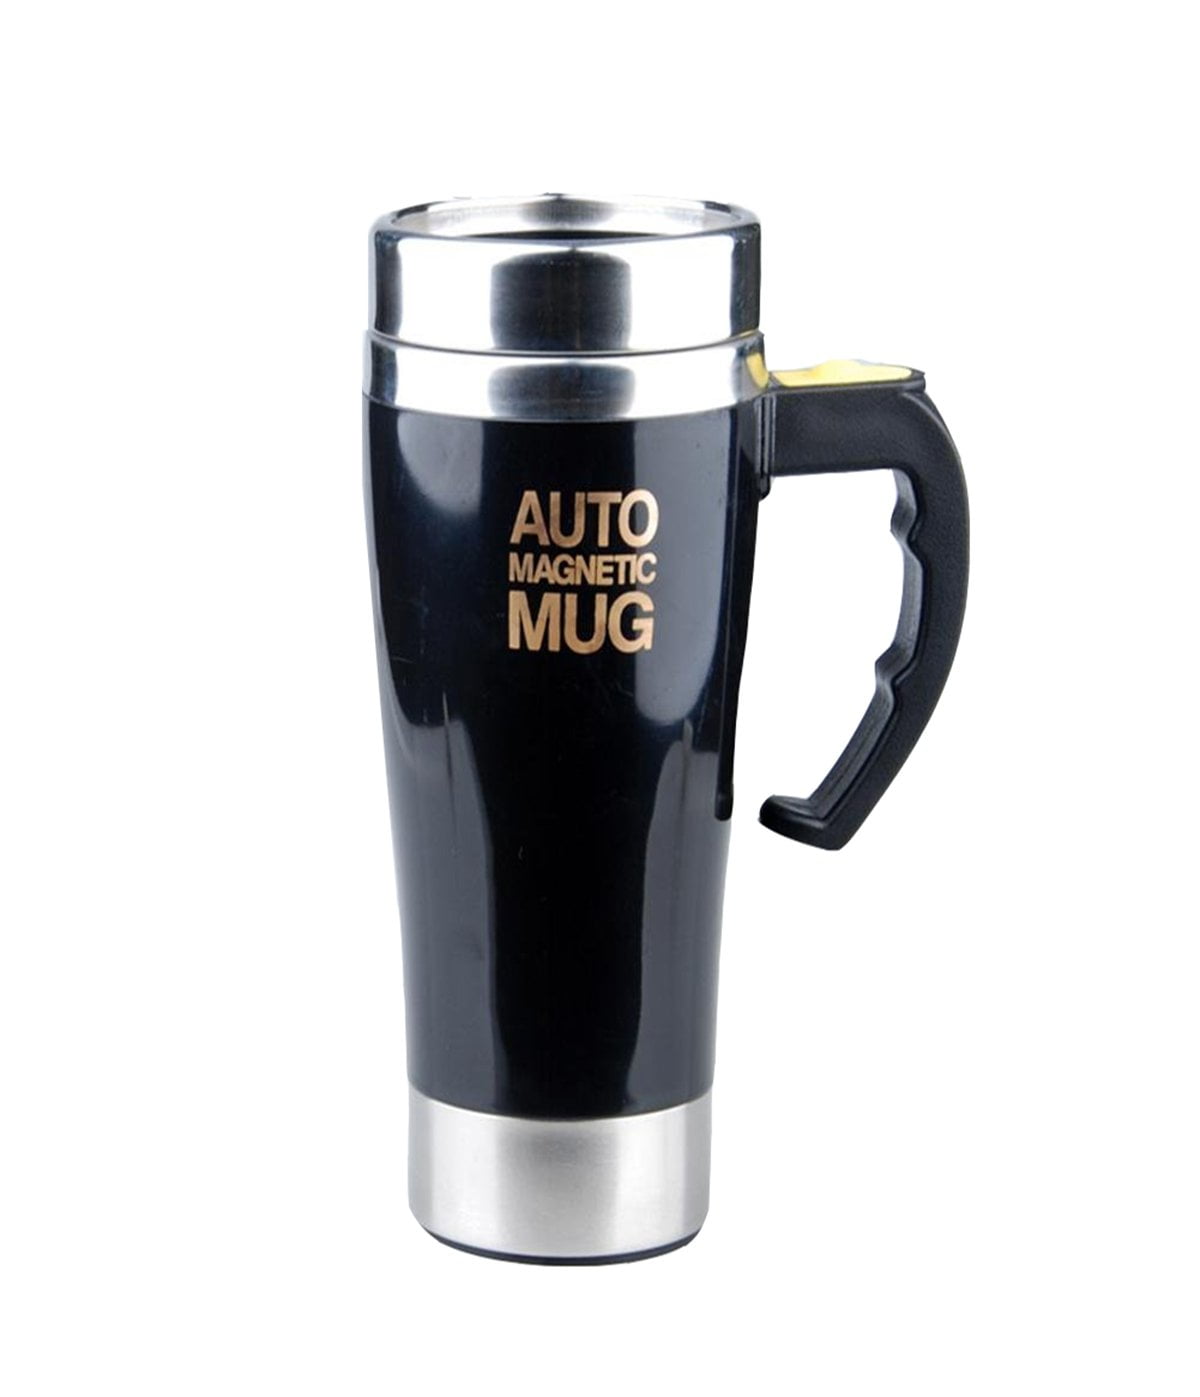 AZFUNN Self Stirring Coffee Mug - Self Stirring, Electric Stainless Steel  Automatic Self Mixing Cup and Mug- Cute & Funny